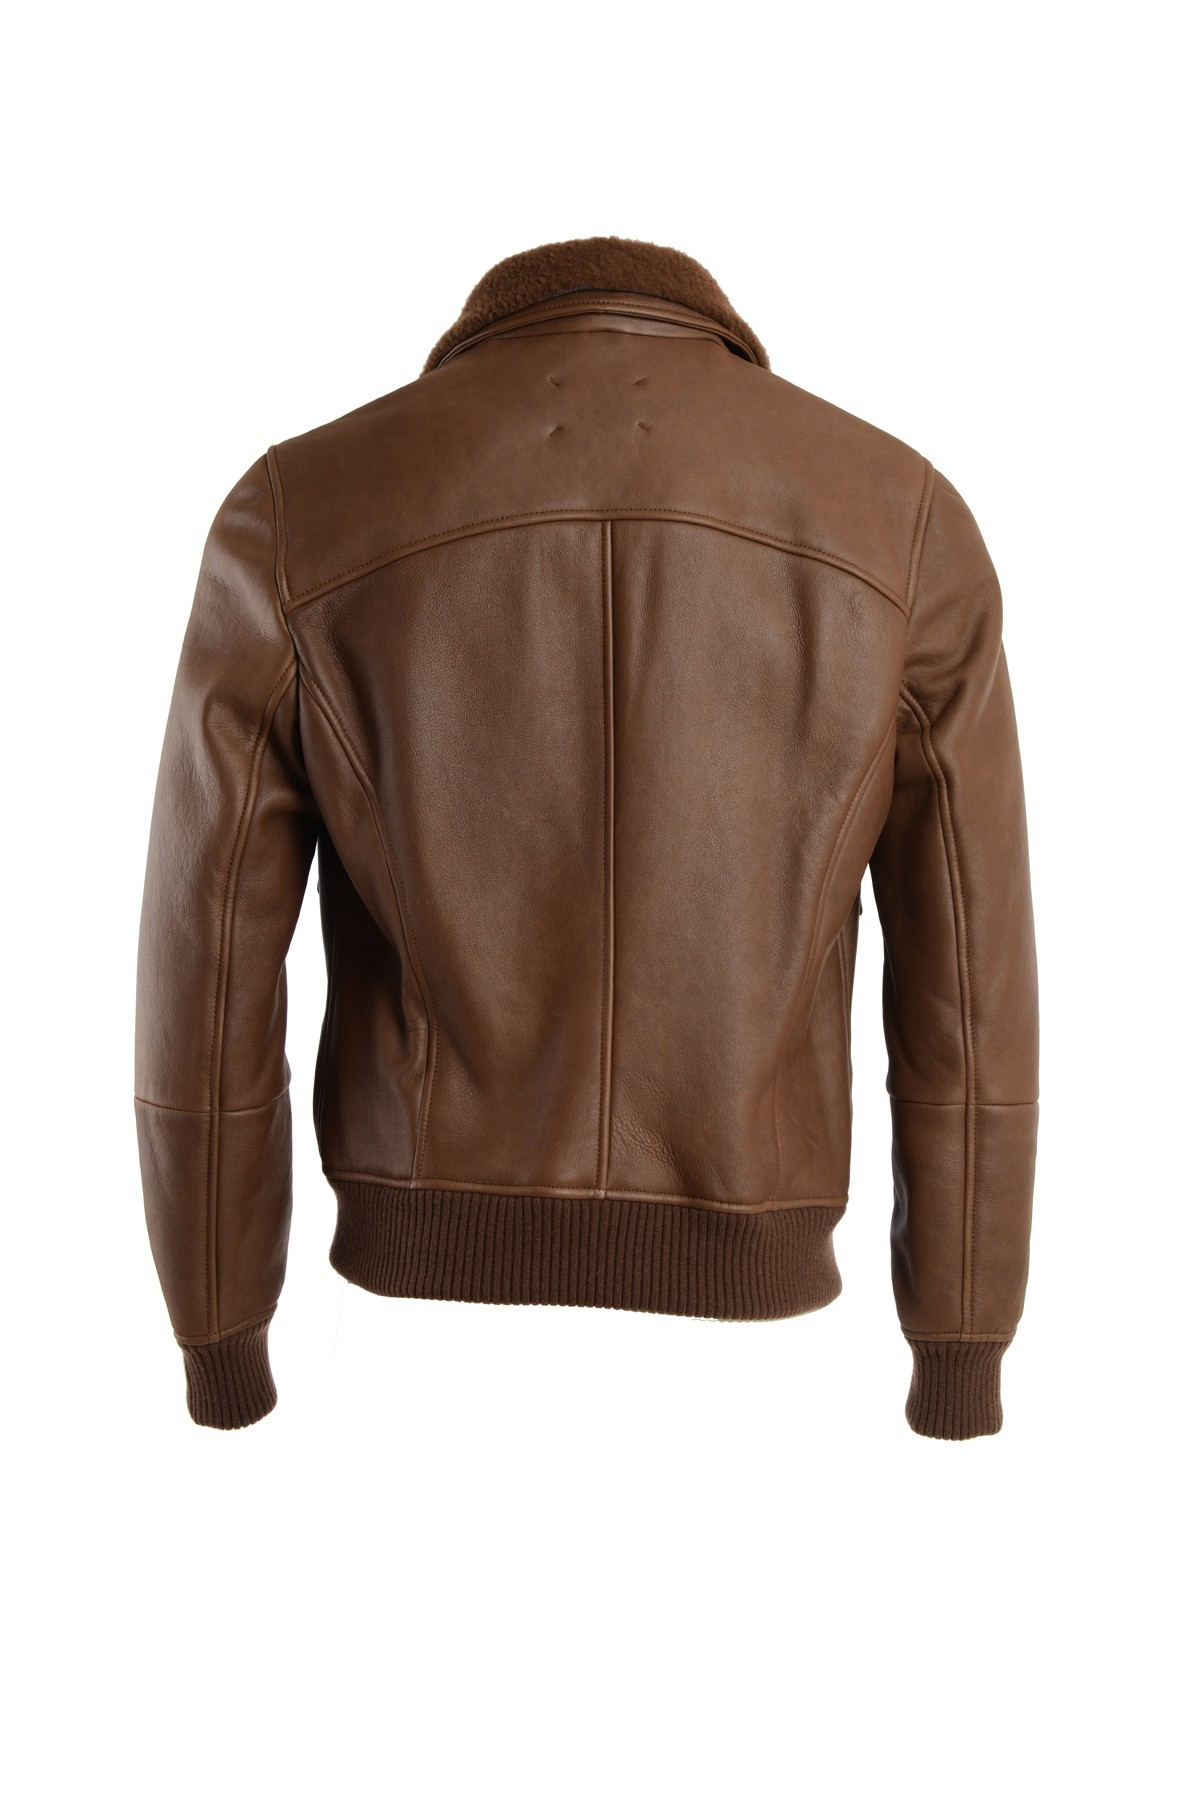 Brunello cucinelli Soft Leather Jacket With Sheepskin Collar in Brown ...